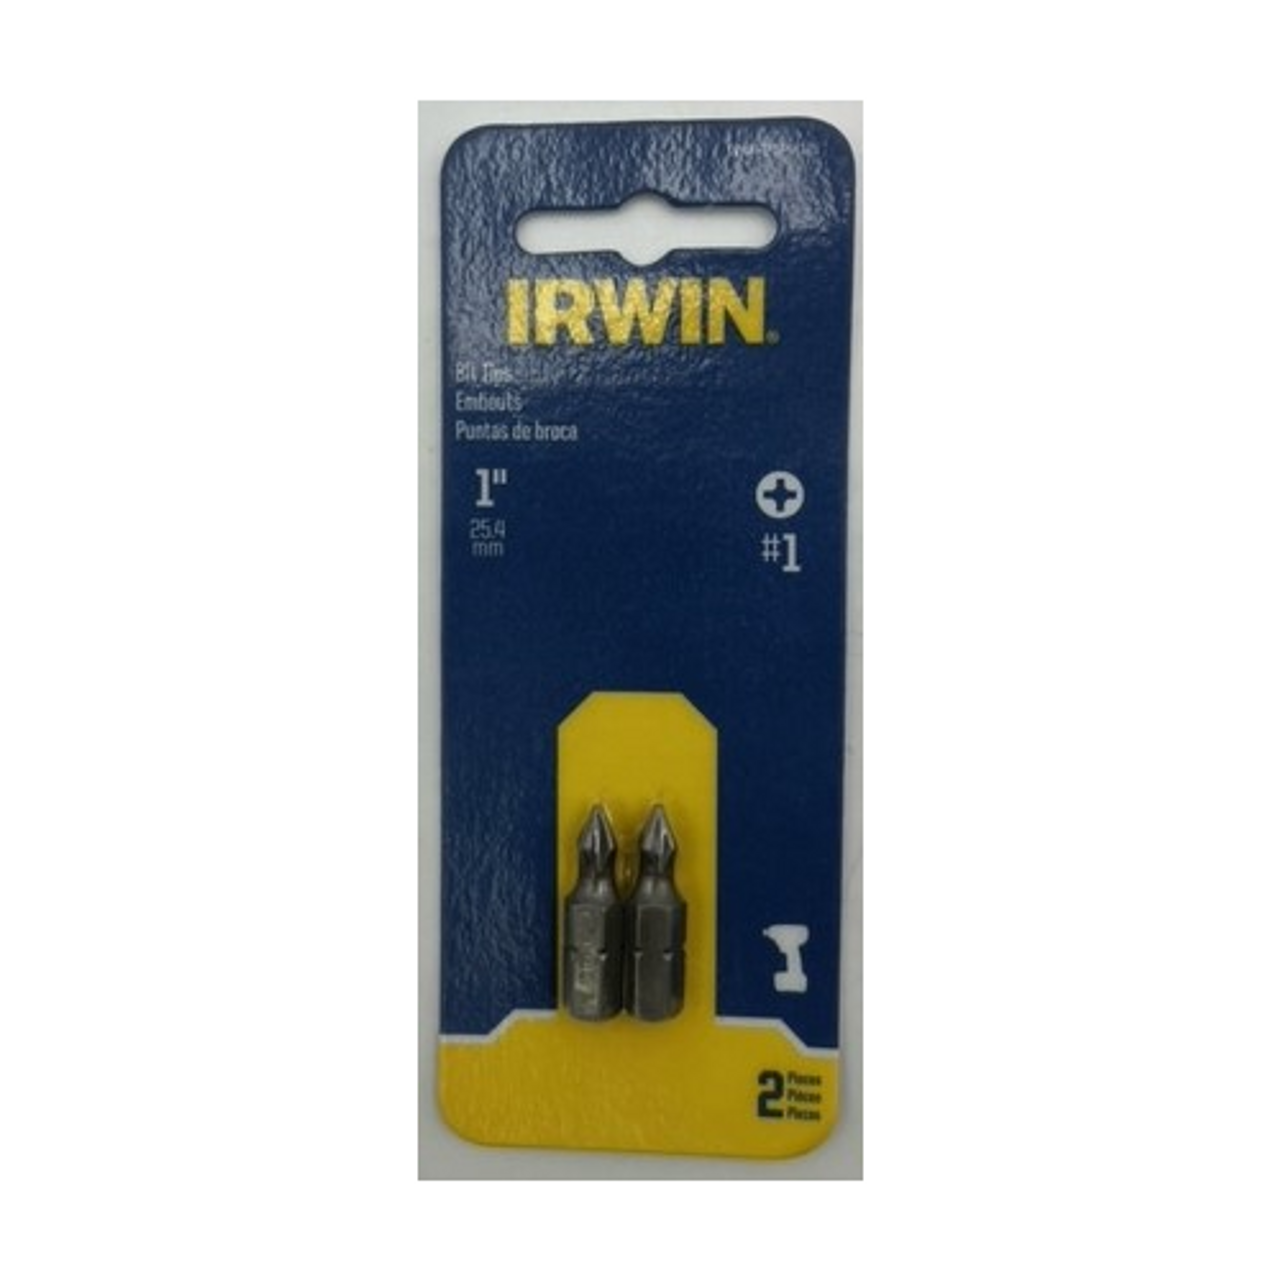 Irwin IWAF21PH12 Phillips Insert Bits #1 PH, 1 inch length - 2 pack